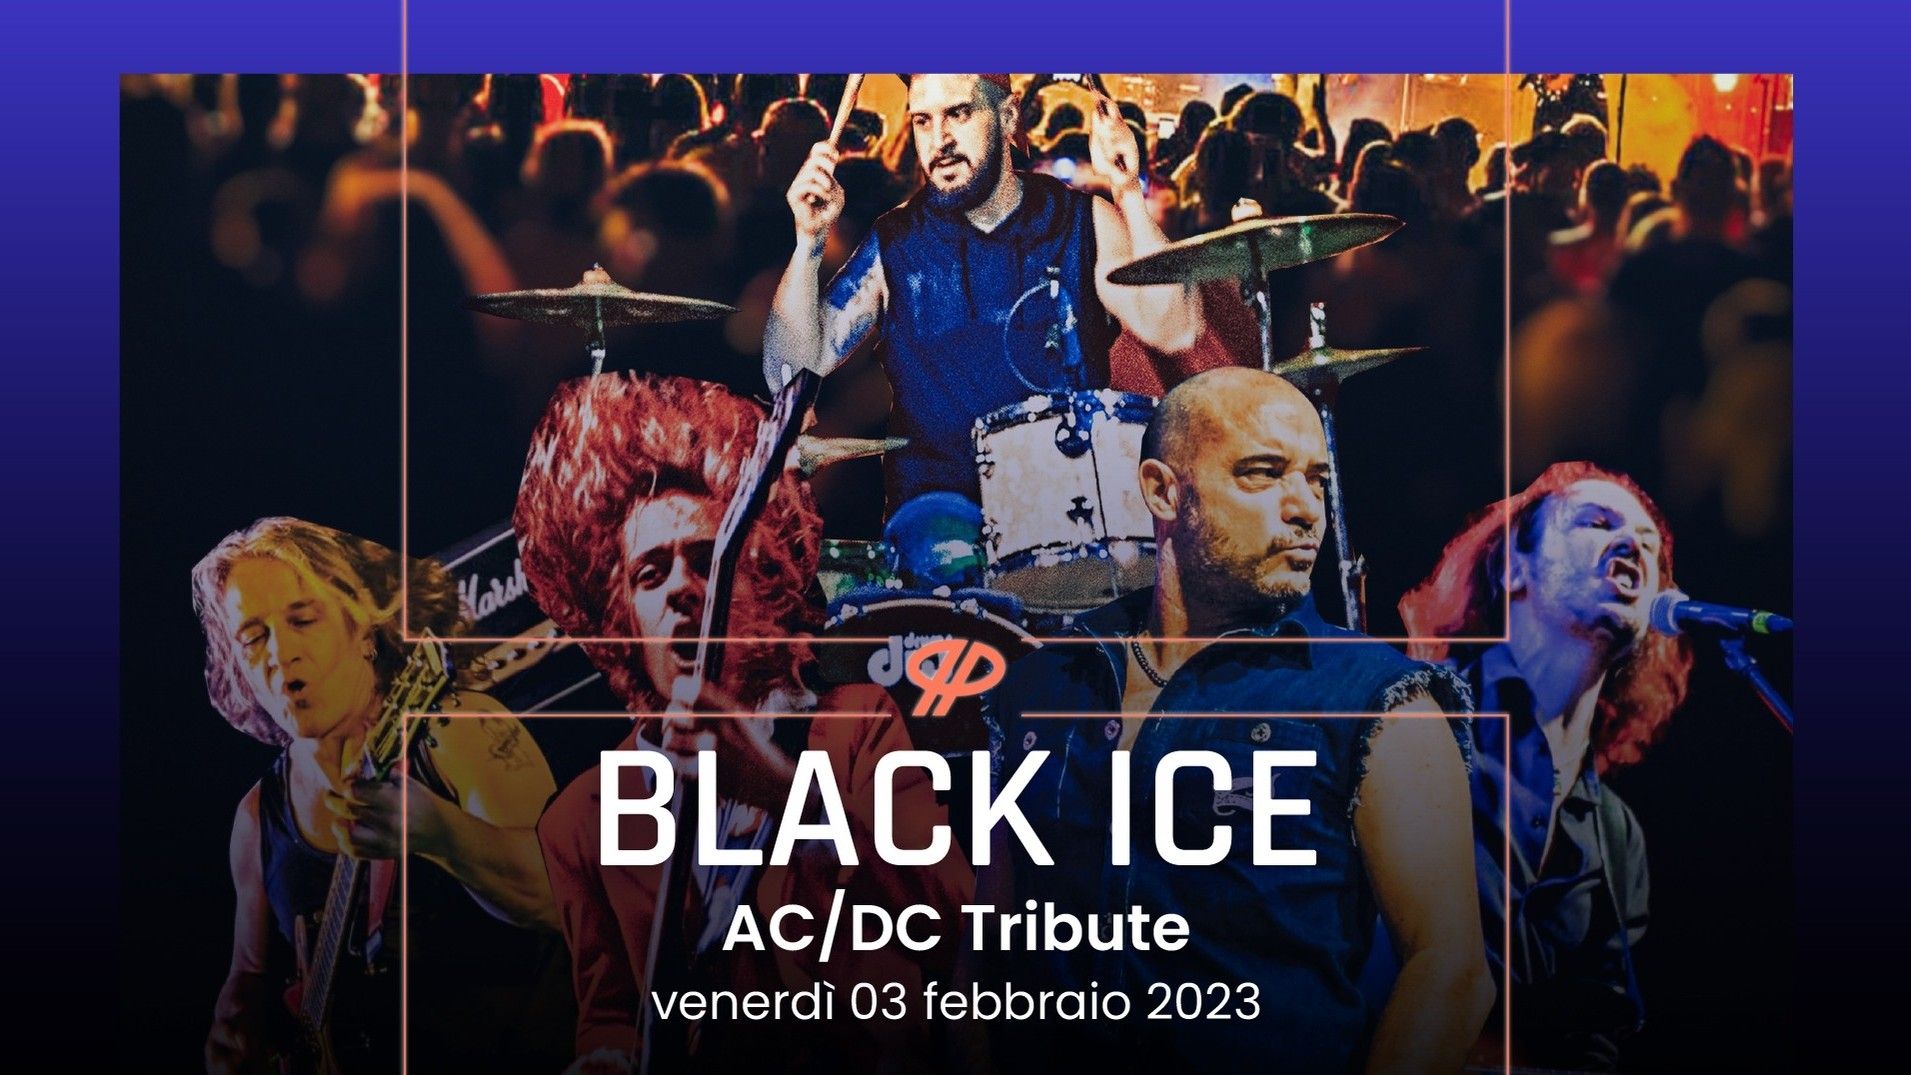 Black Ice - AC/DC experience